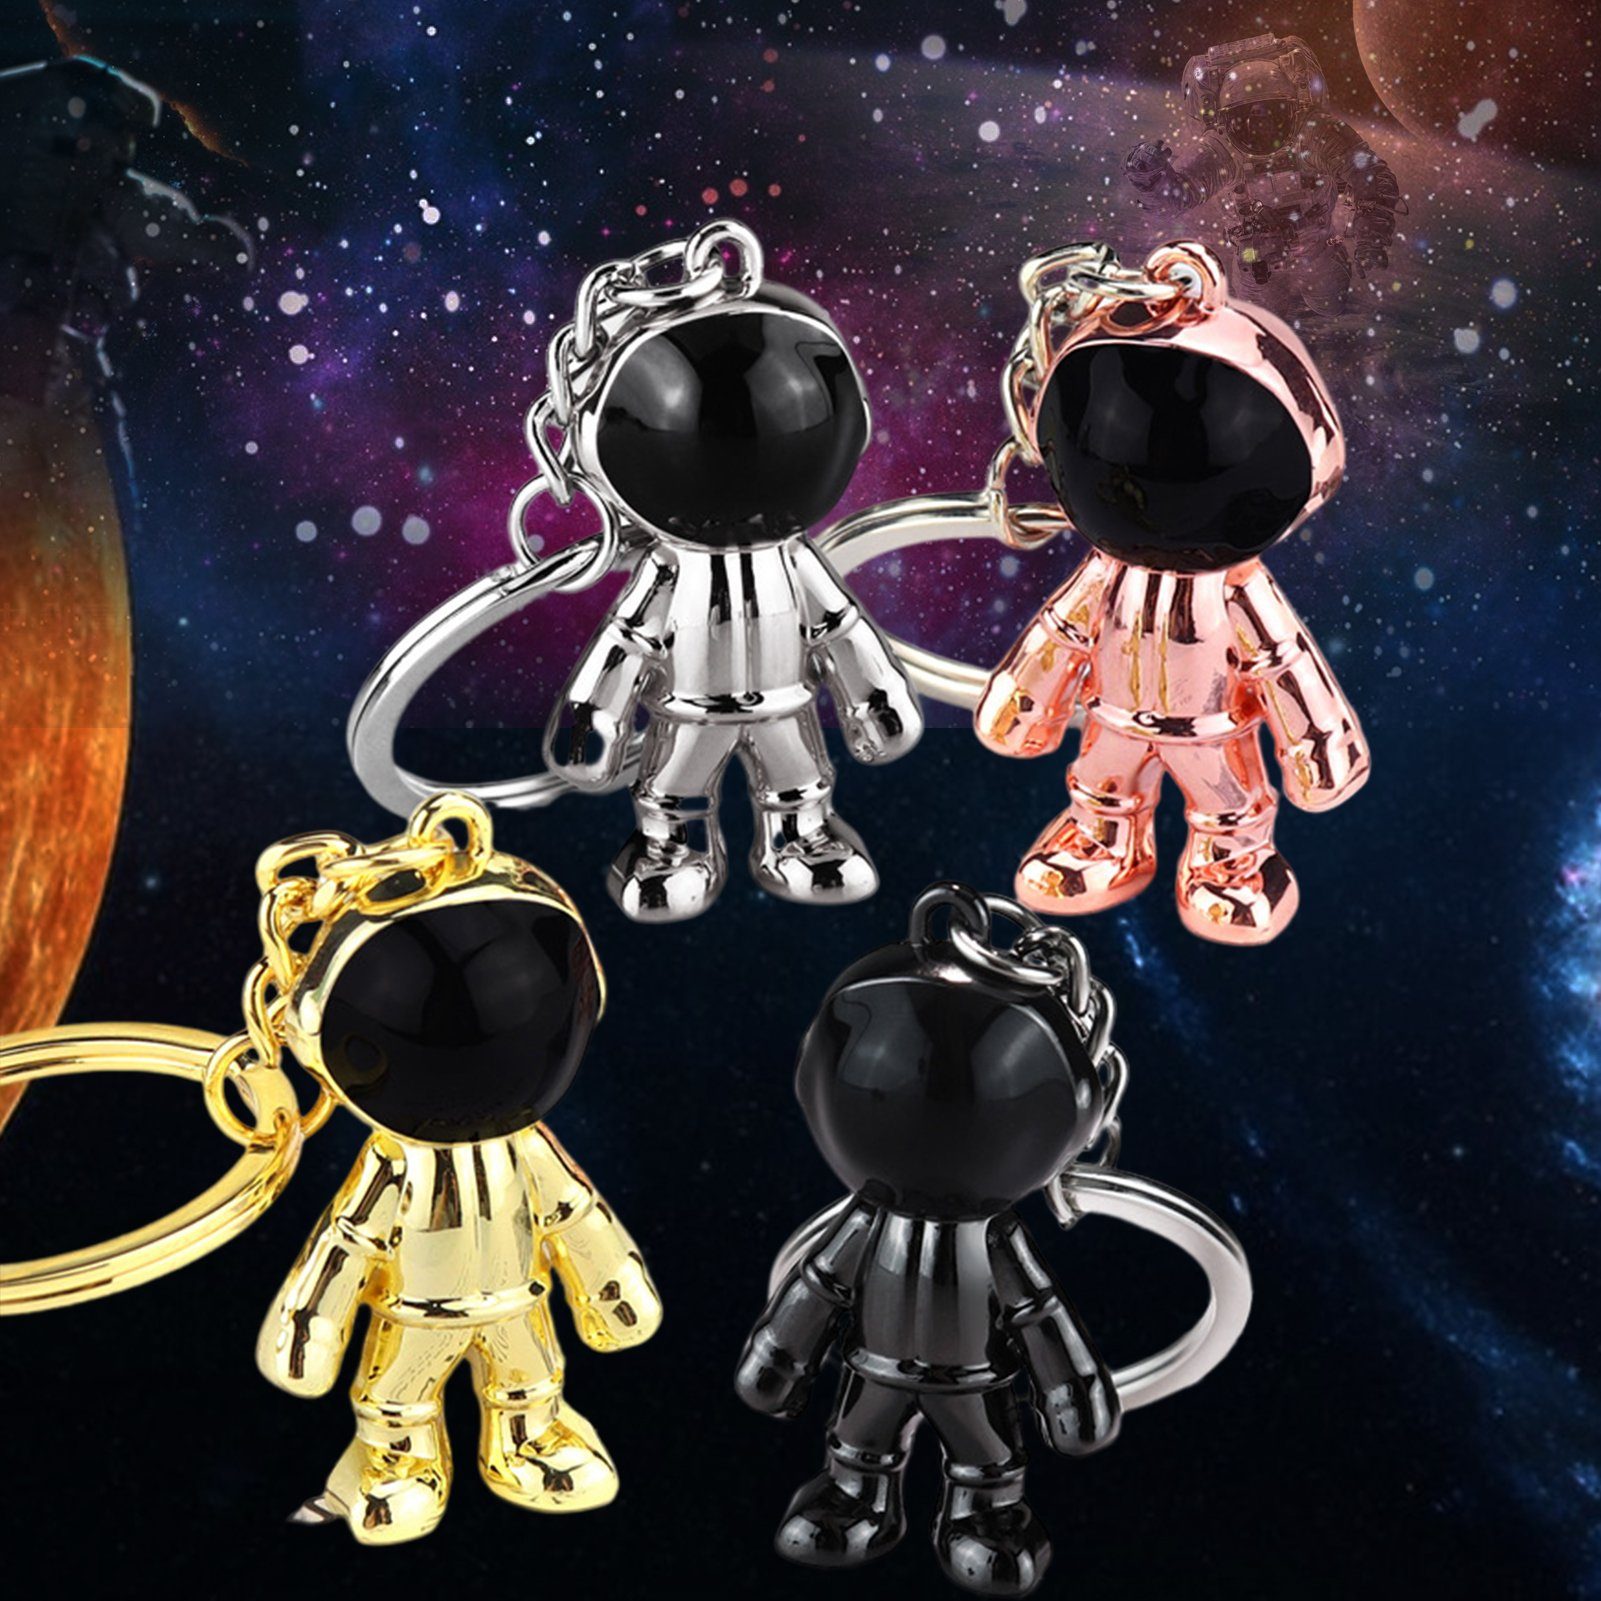 Astronaut 3D Schlüsselanhänger Ornamente Auto-Schlüsselanhängern Schwarz von für Schlüsselanhänger (Galvanisieren Rutaqian Paare, Cartoon Modellornamenten, Taschenanhängern, Rucksackanhängern) Astronautenpuppe